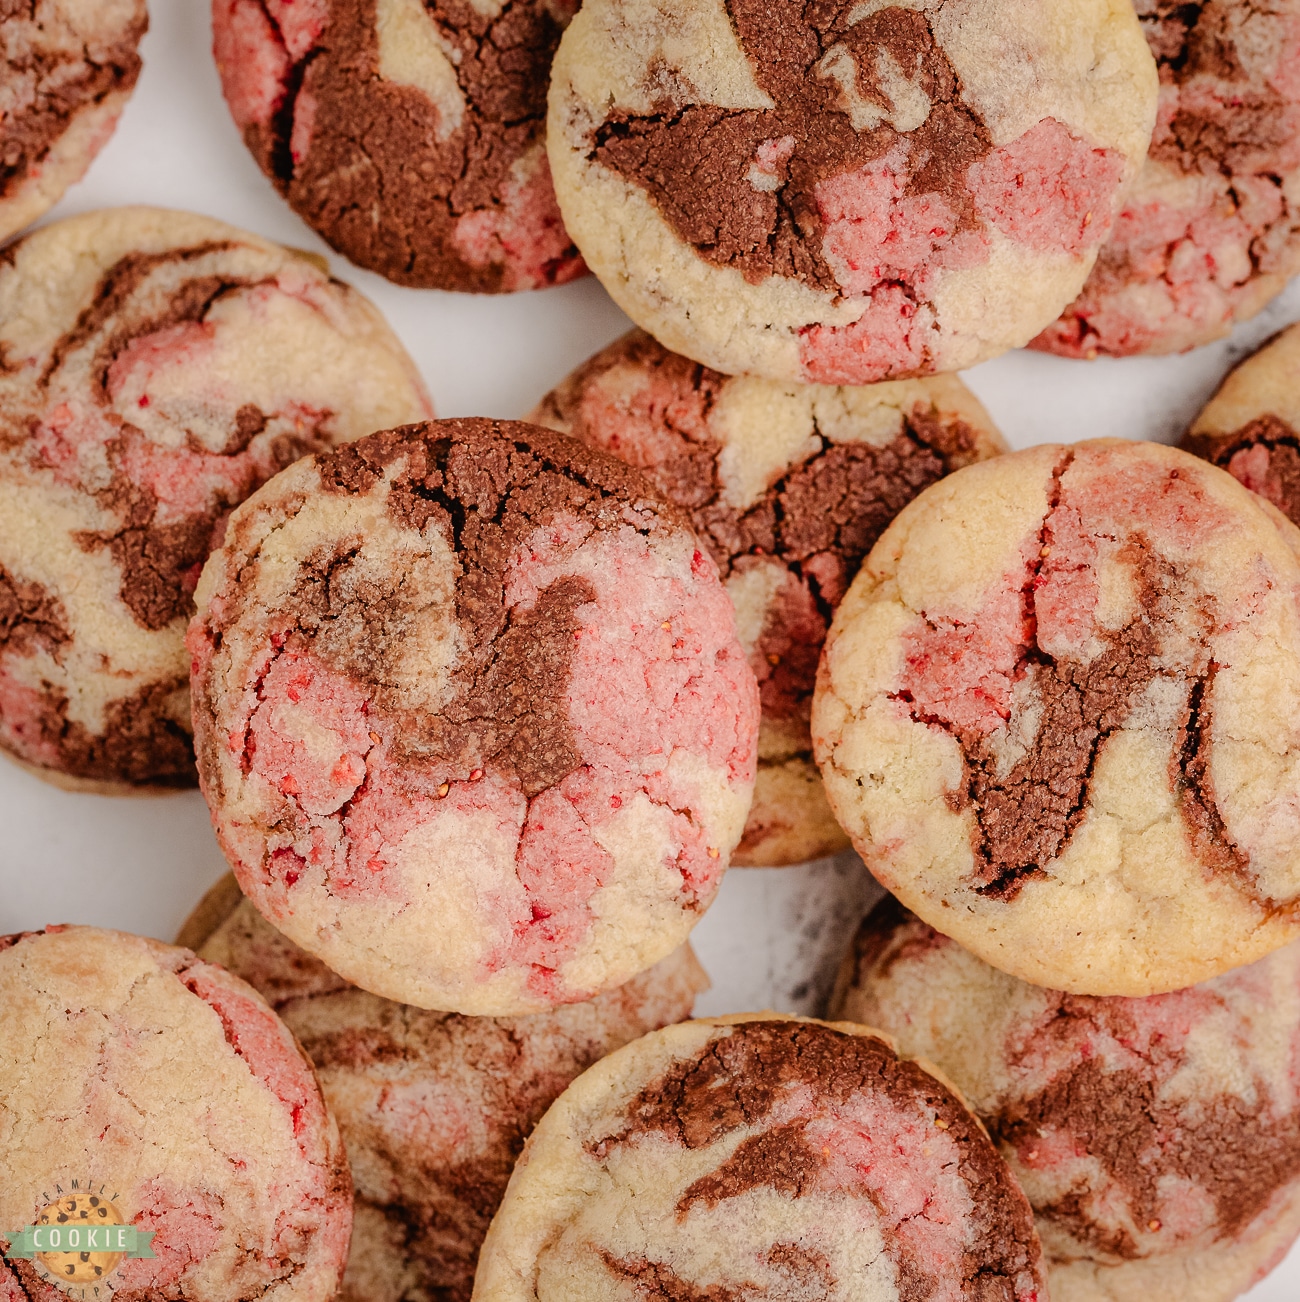 neapolitan cookies with swirls of chocolate, strawberry and vanilla cookie dough